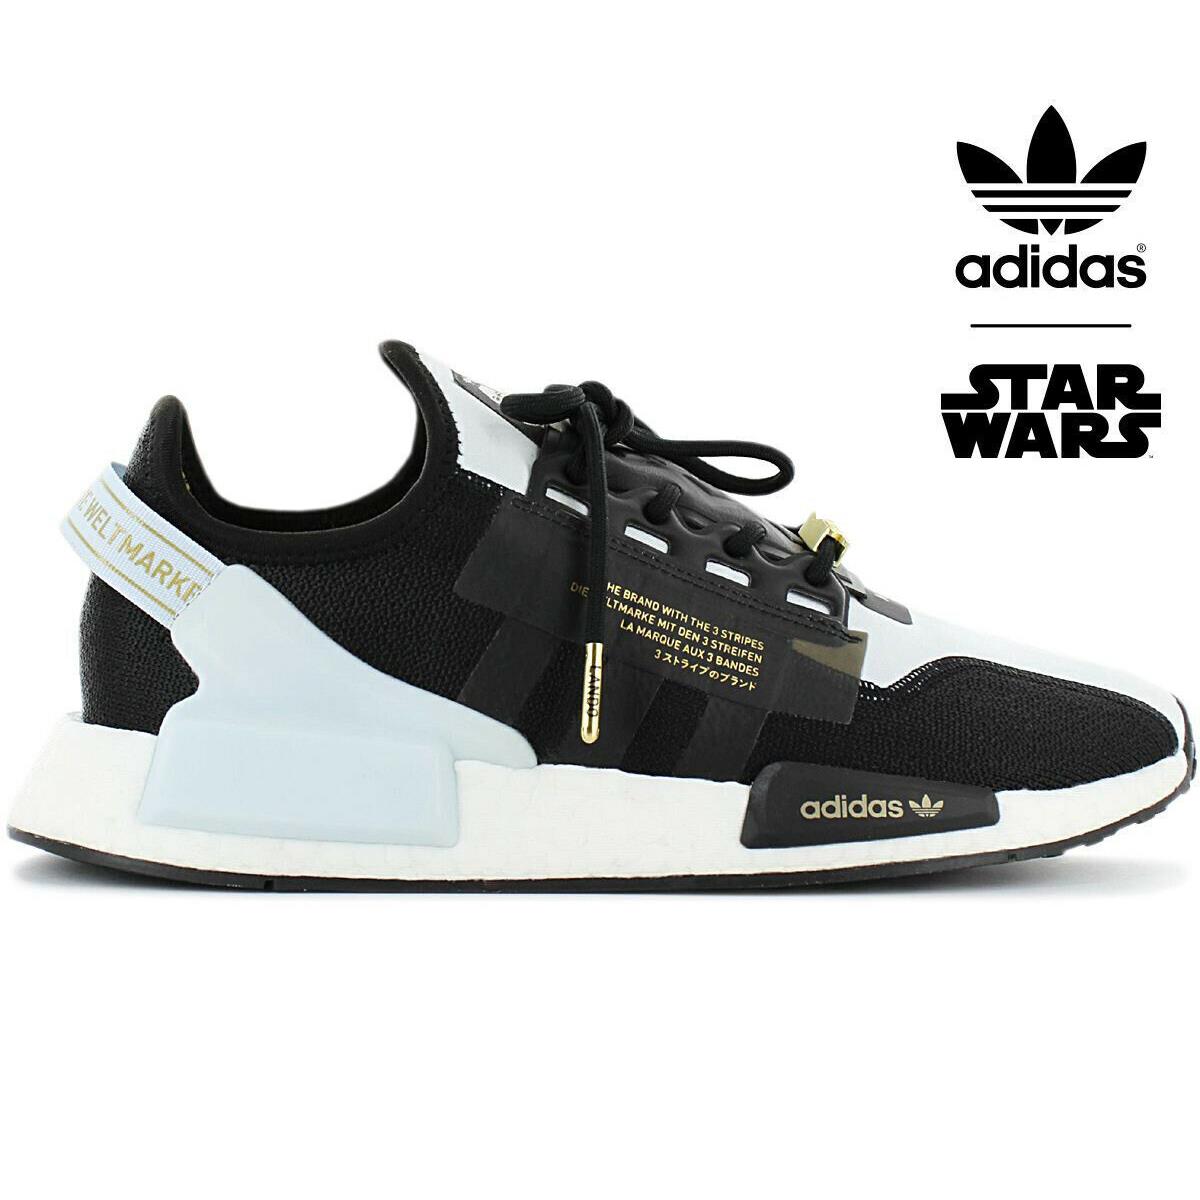 Adidas X Star Wars Nmd R1 V2 Lando Calrissian FX9300 Sneaker Shoes Size 9 US